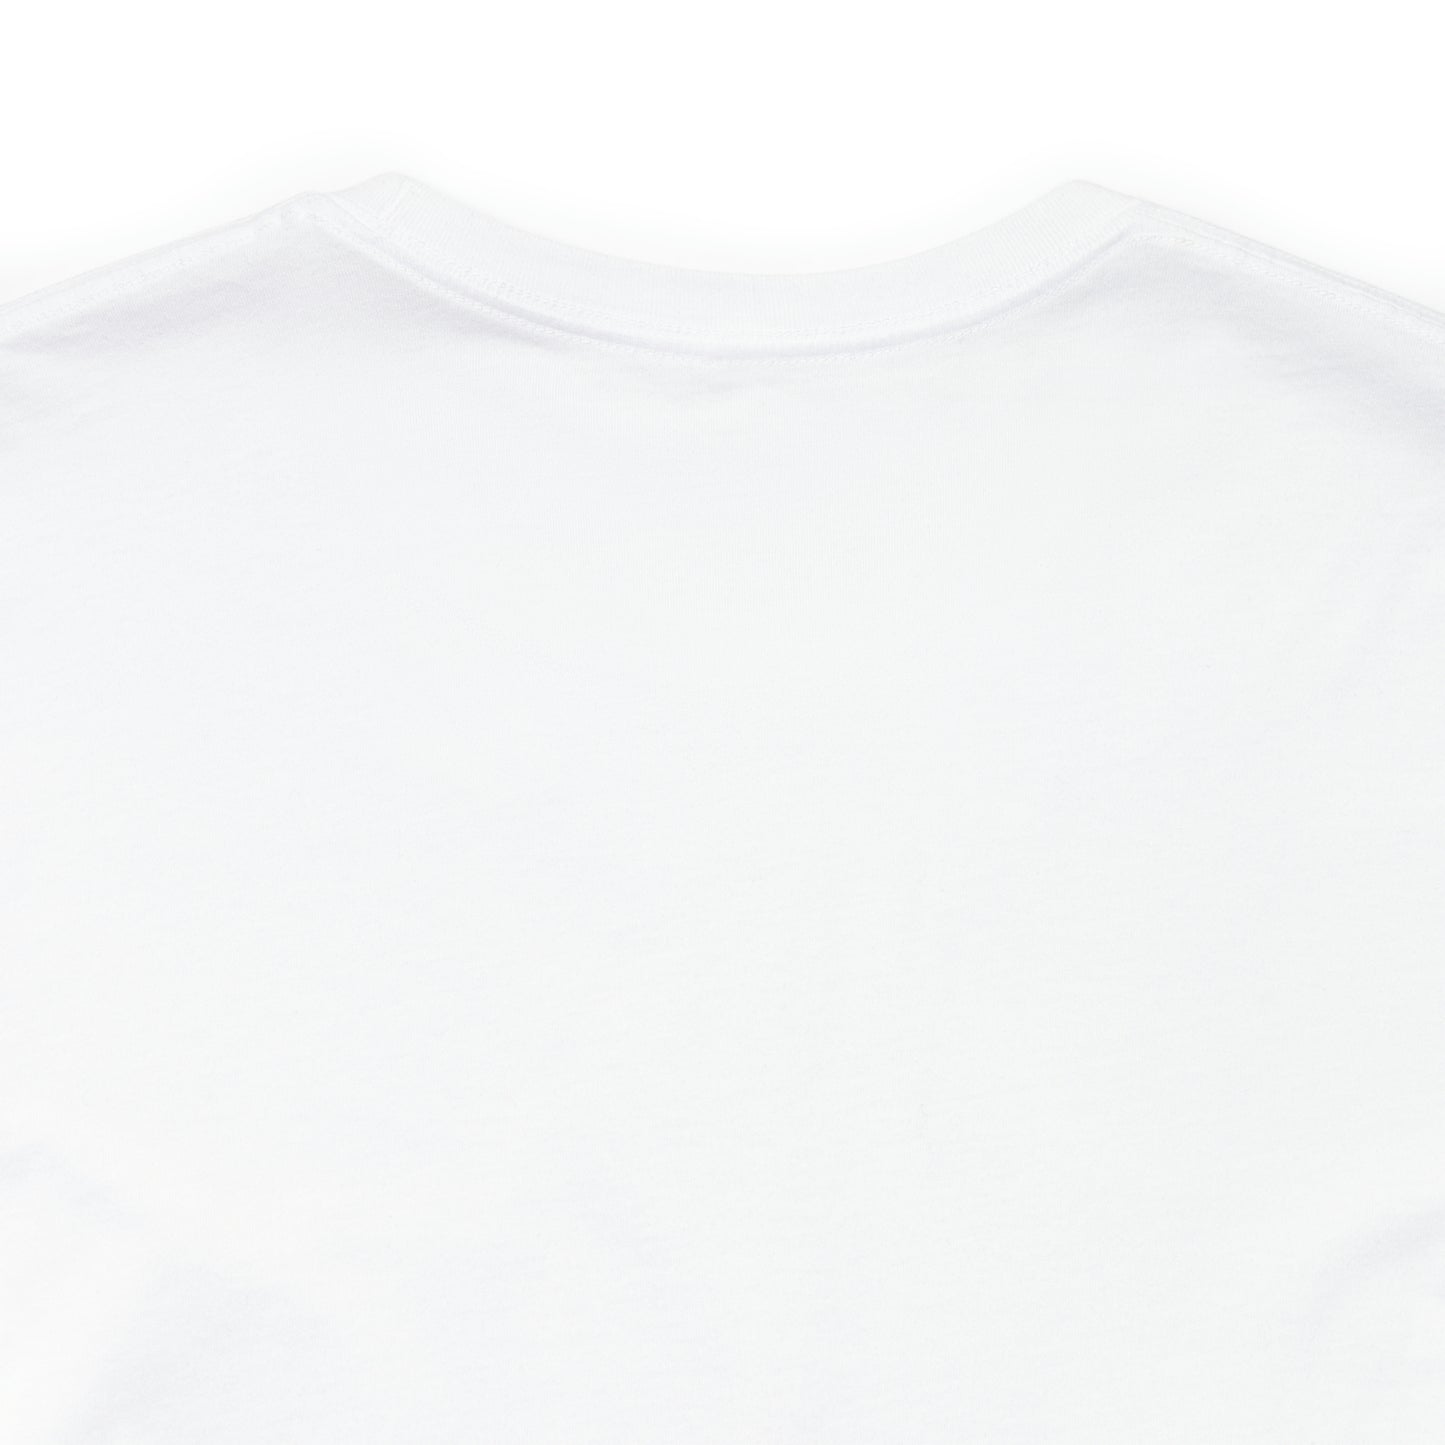 Black or White Logo T-Shirt